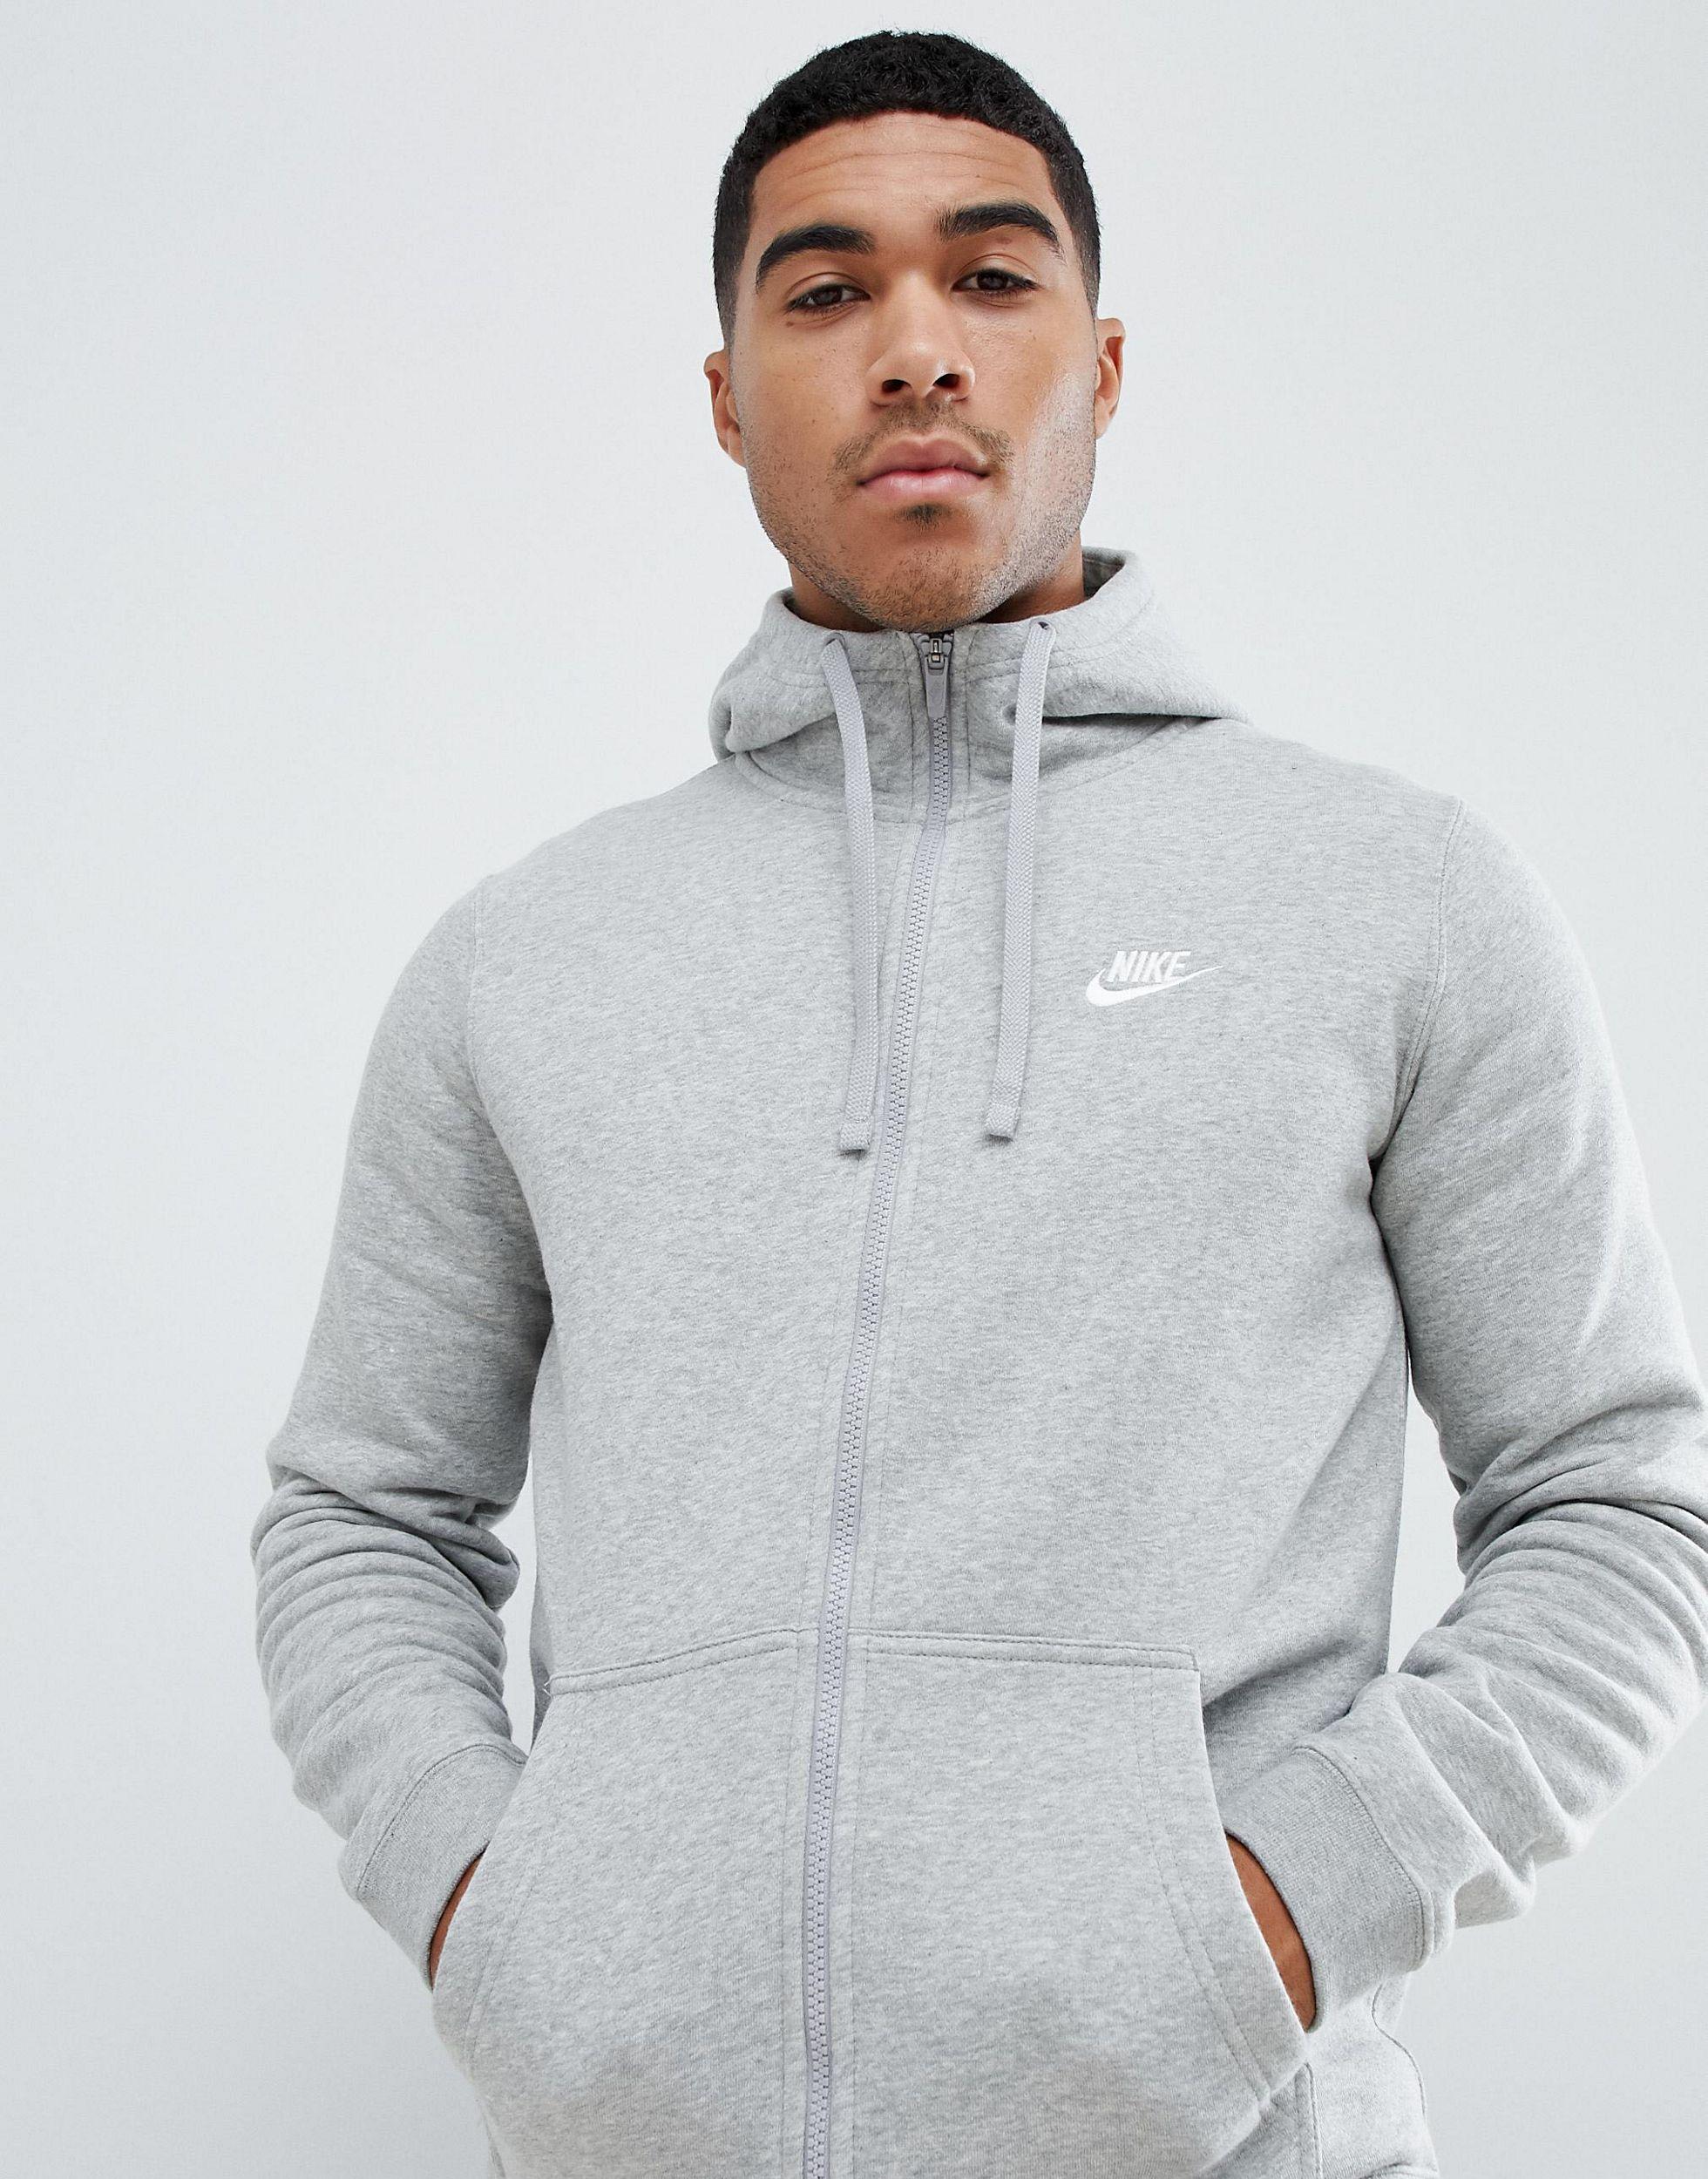 Nike Cotton Club Zip Hoody in Dark Grey Heather (Grey) for Men - Save 5% |  Lyst Australia